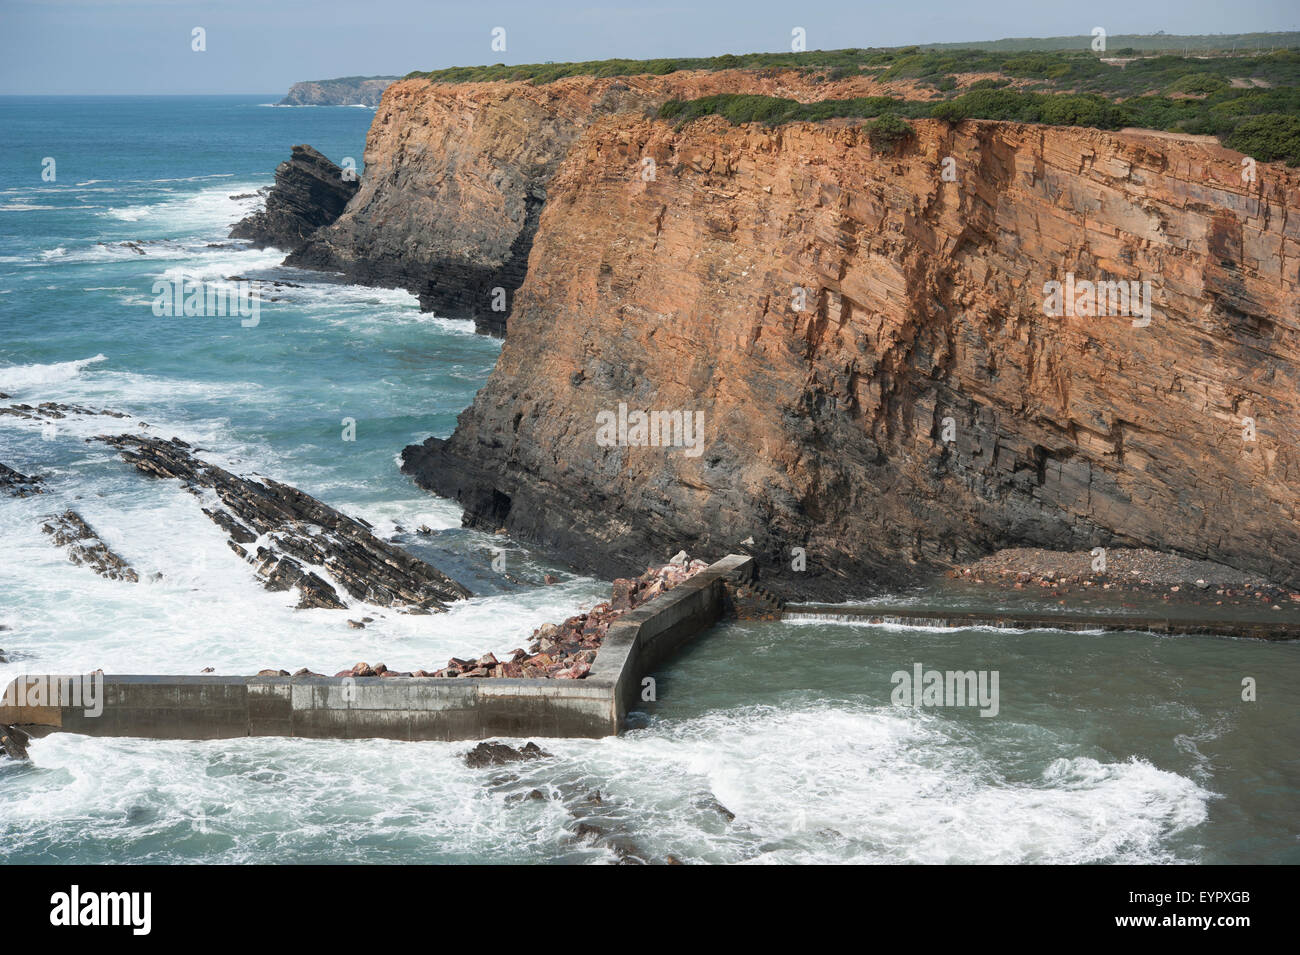 View of cliffs at Entrada da Barco, Parque Natural do Sudoeste Alentejano e Costa Vicentina, Portugal. Stock Photo